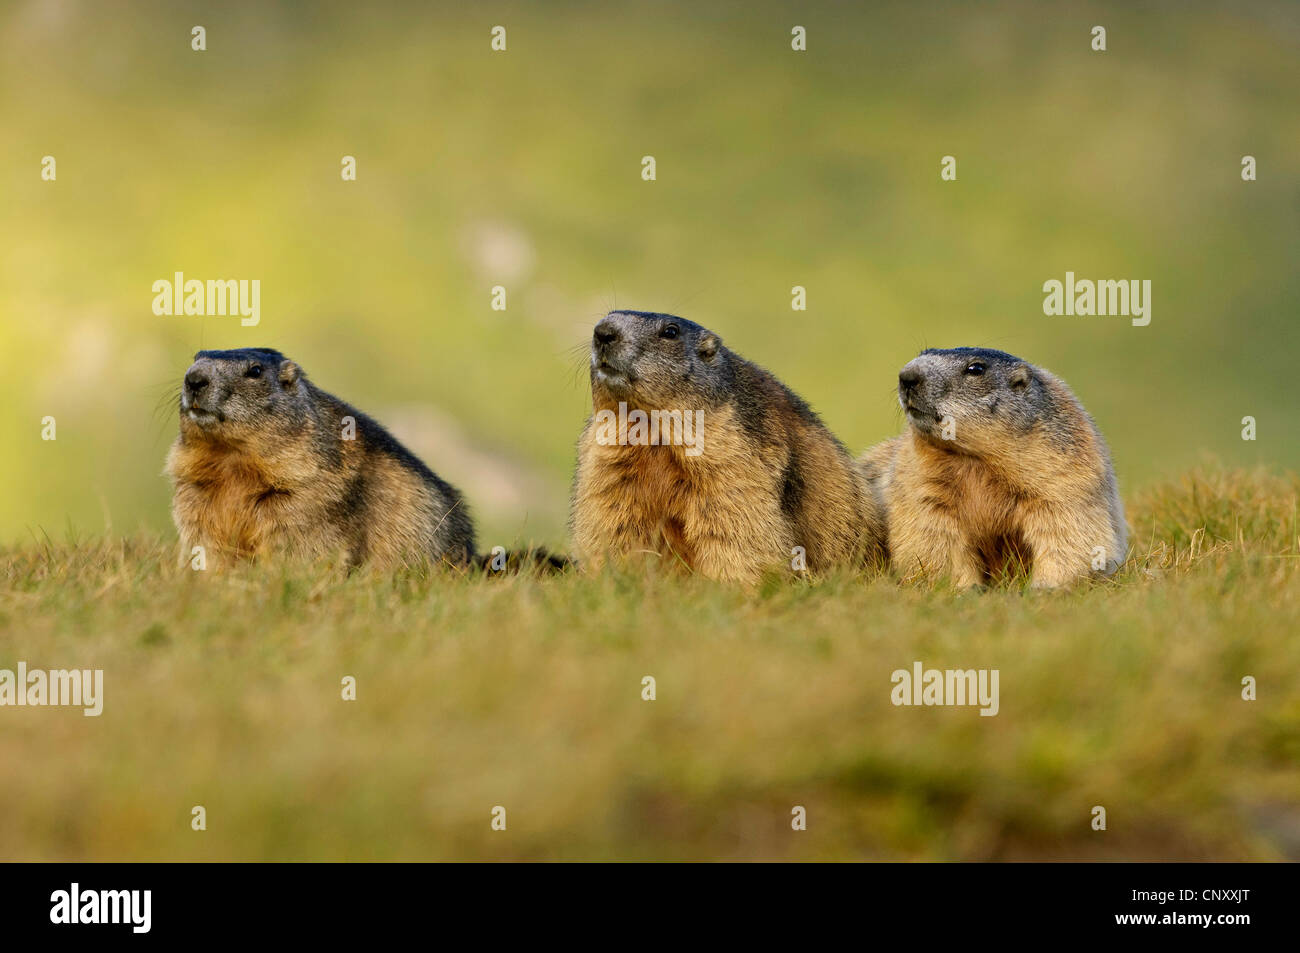 alpine marmot (Marmota marmota), three animals sitting side by side in ...